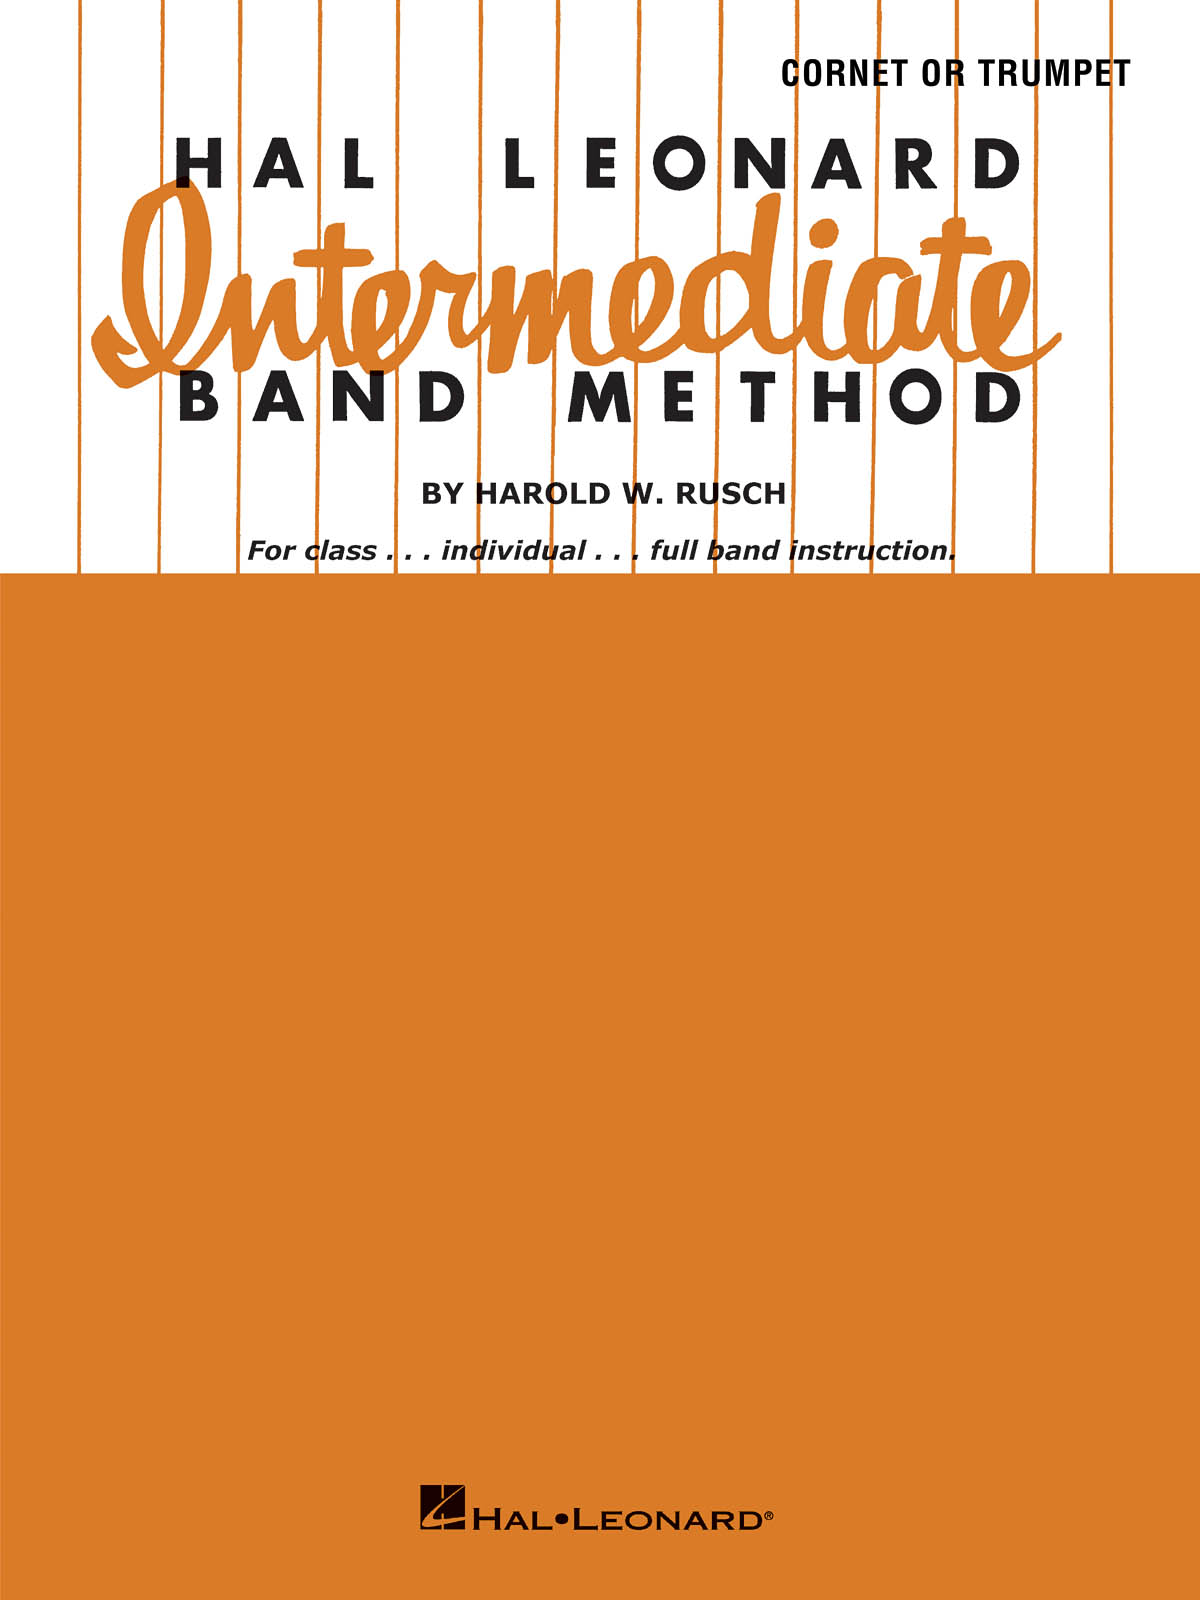 Hal Leonard Intermediate Band Method(B-flat Cornet or Trumpet)